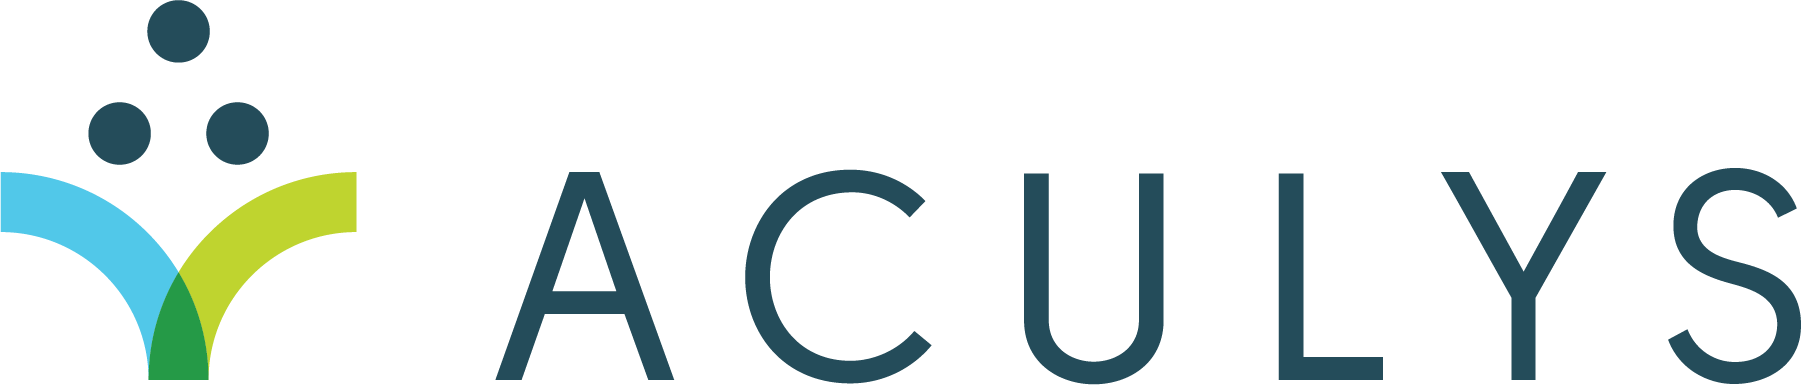 Vision Fund investment portfolio company Aculys's logo